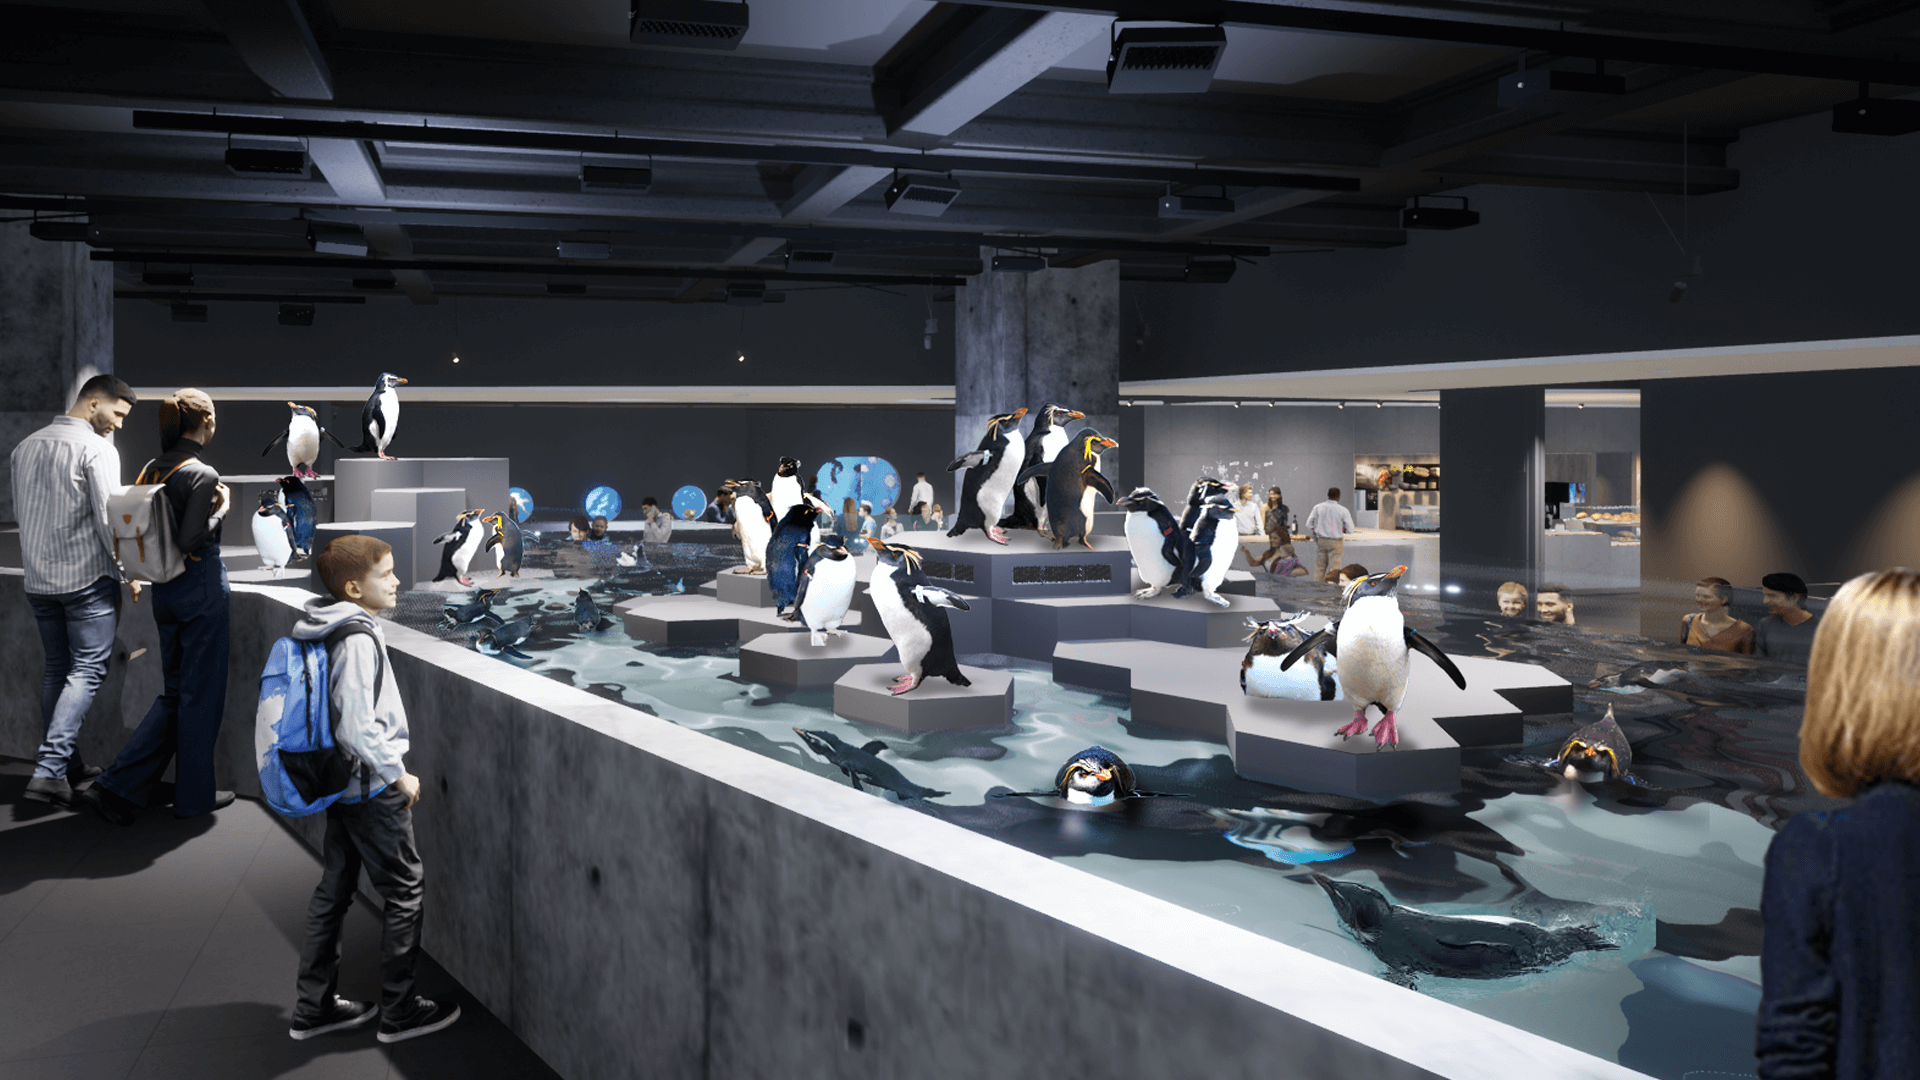 ＡＯＡＯ ＳＡＰＰＯＲＯの『ペンギン展示水槽』